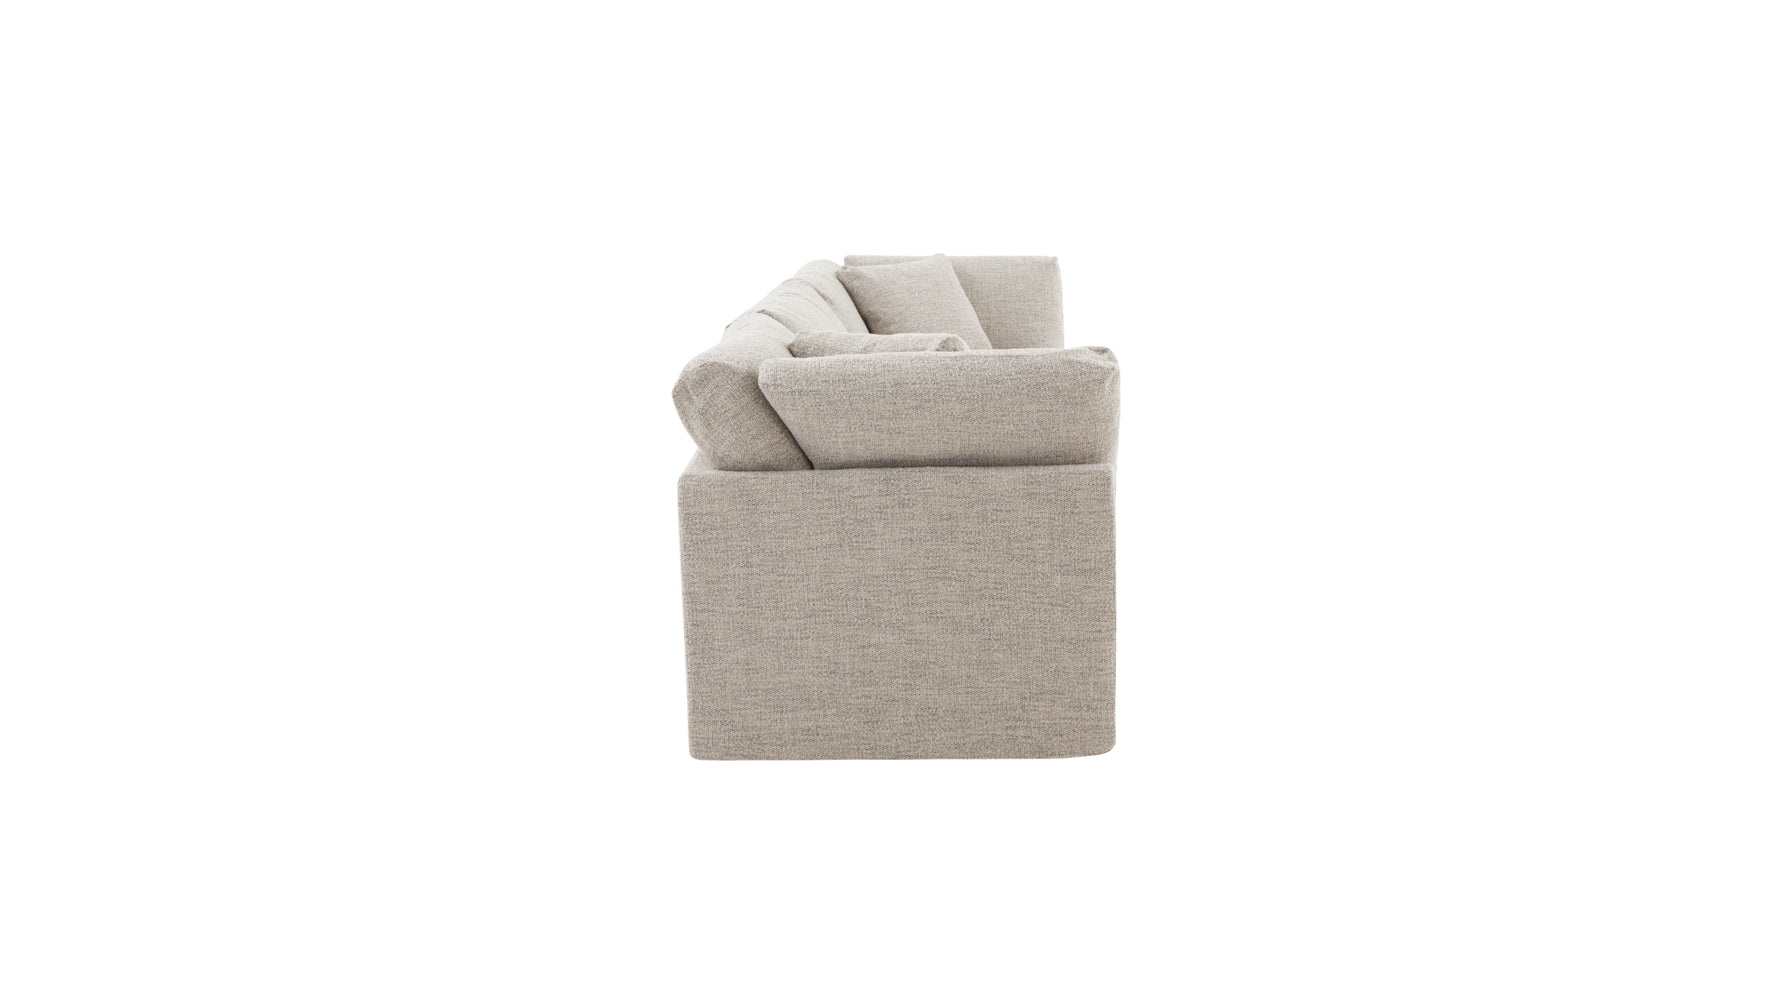 Get Together™ 3-Piece Modular Sofa, Standard, Oatmeal - Image 5